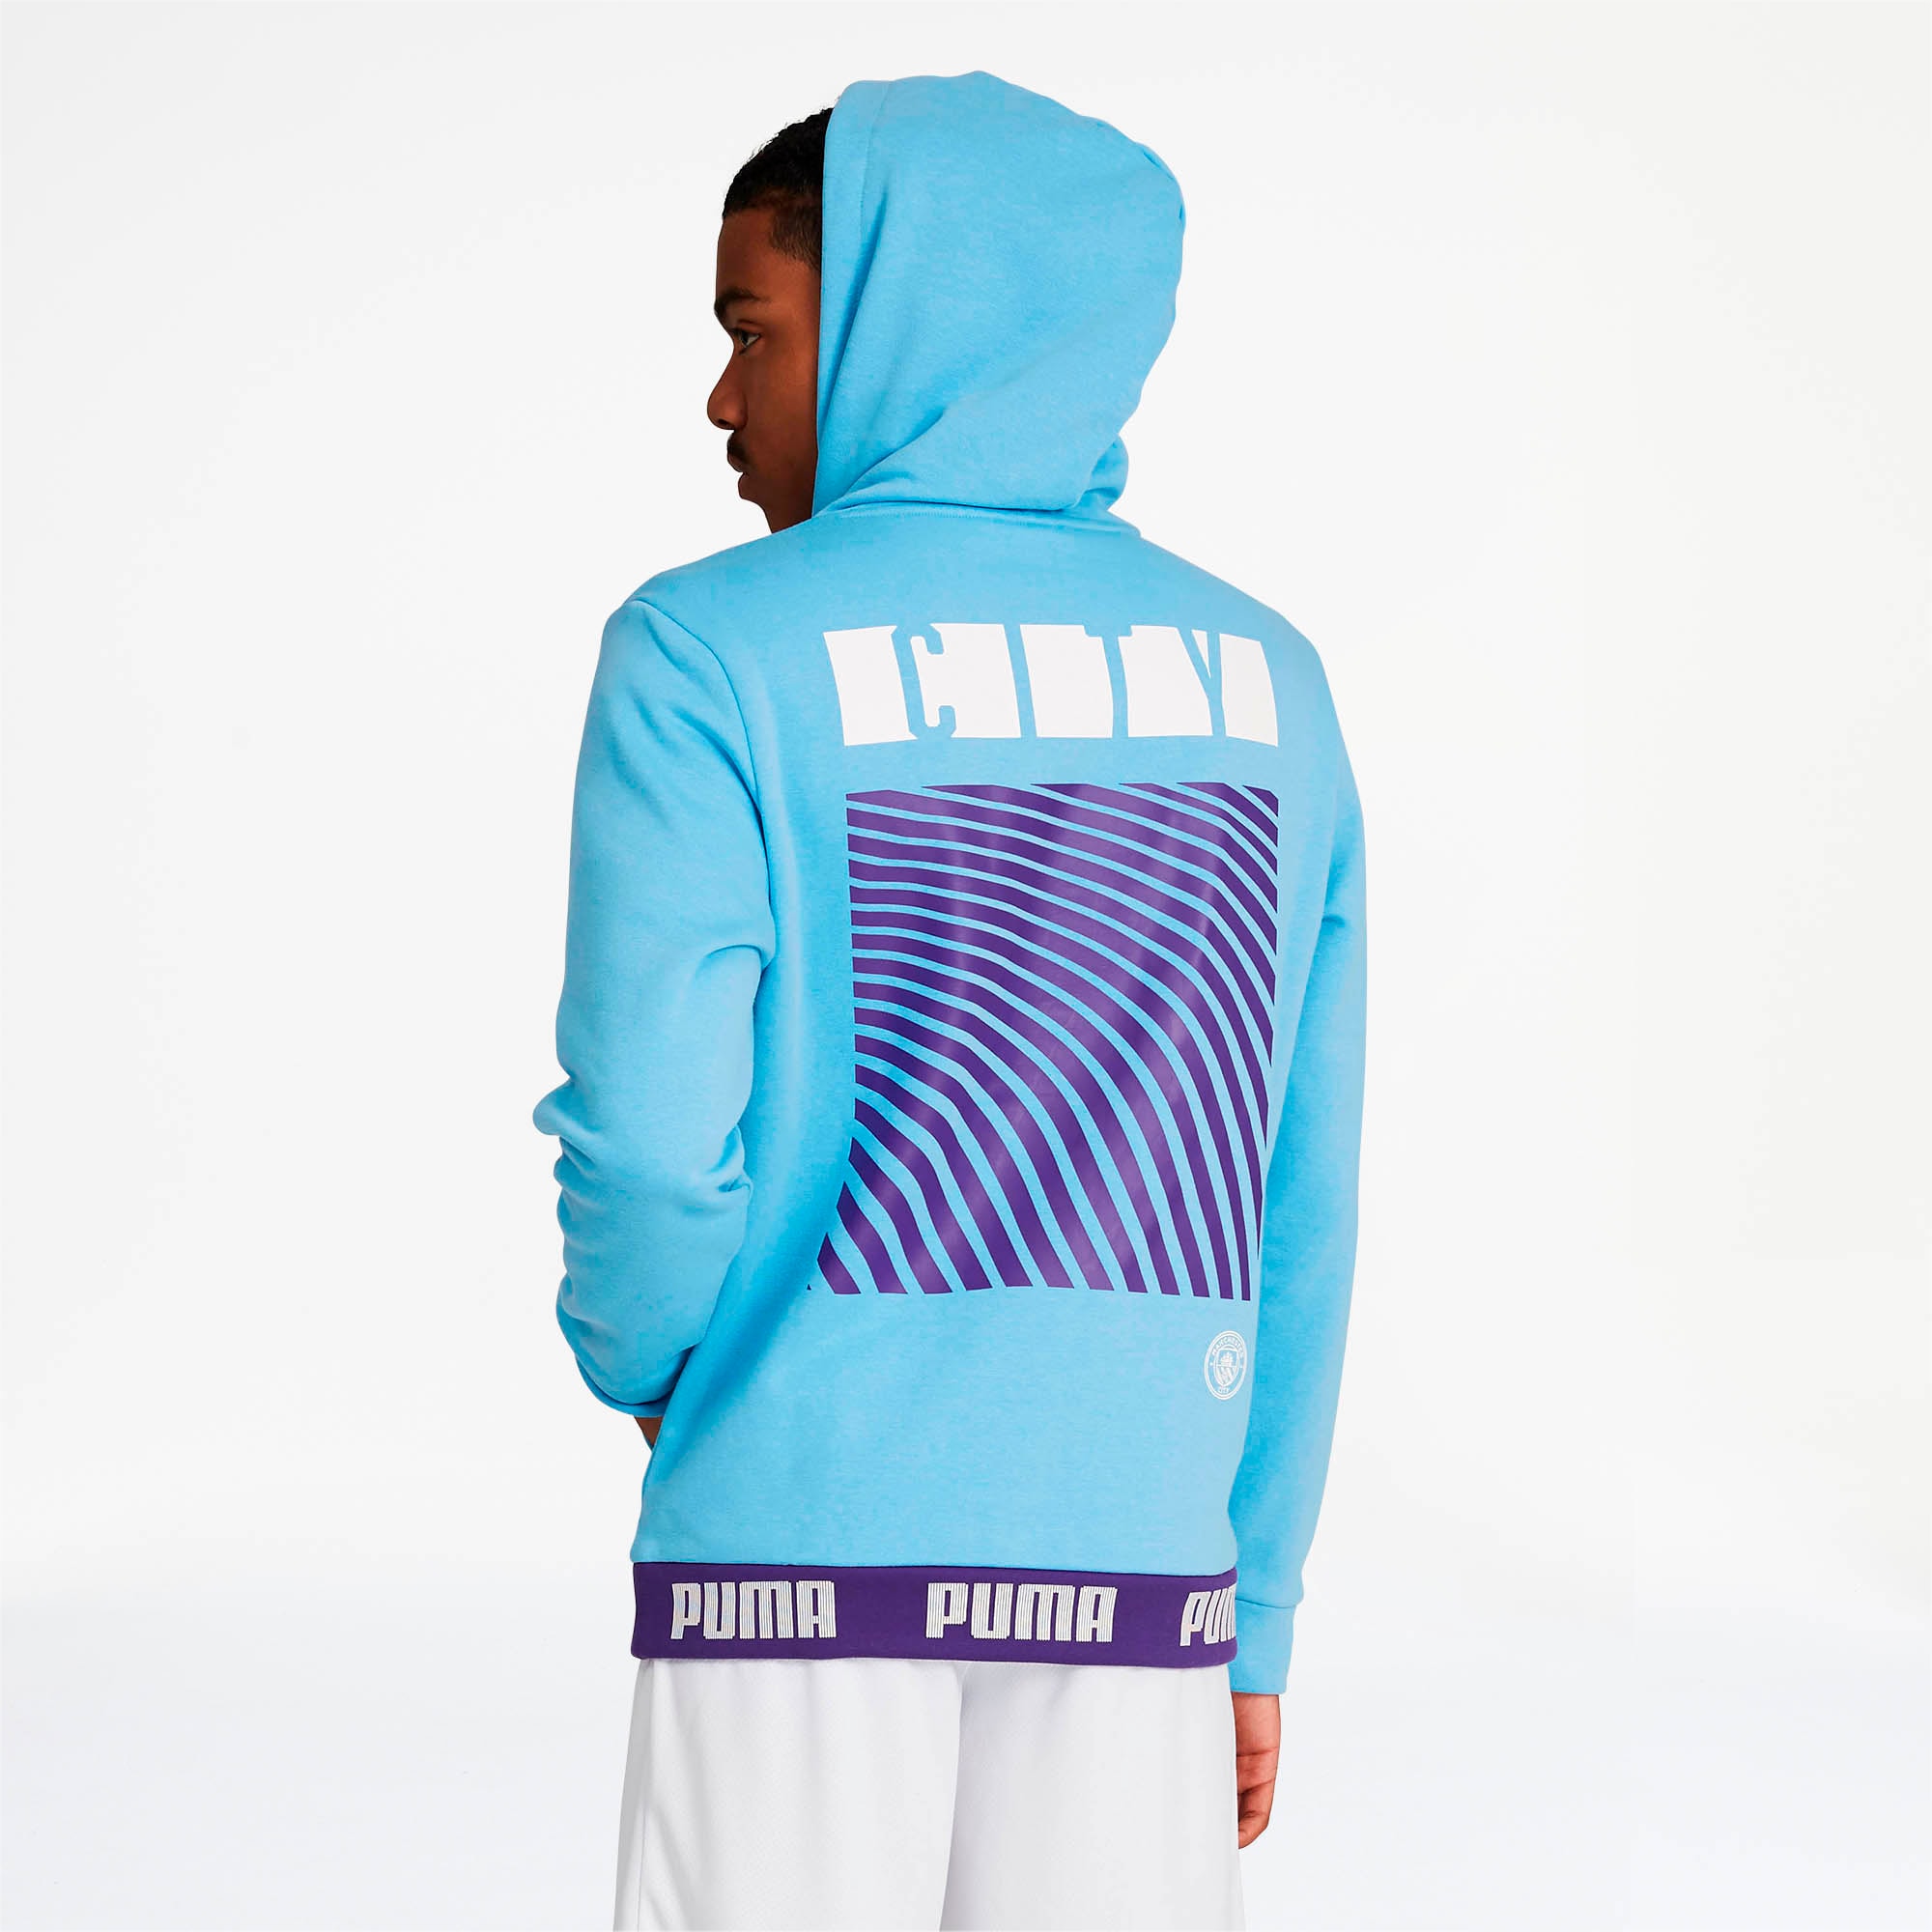 man city puma hoodie